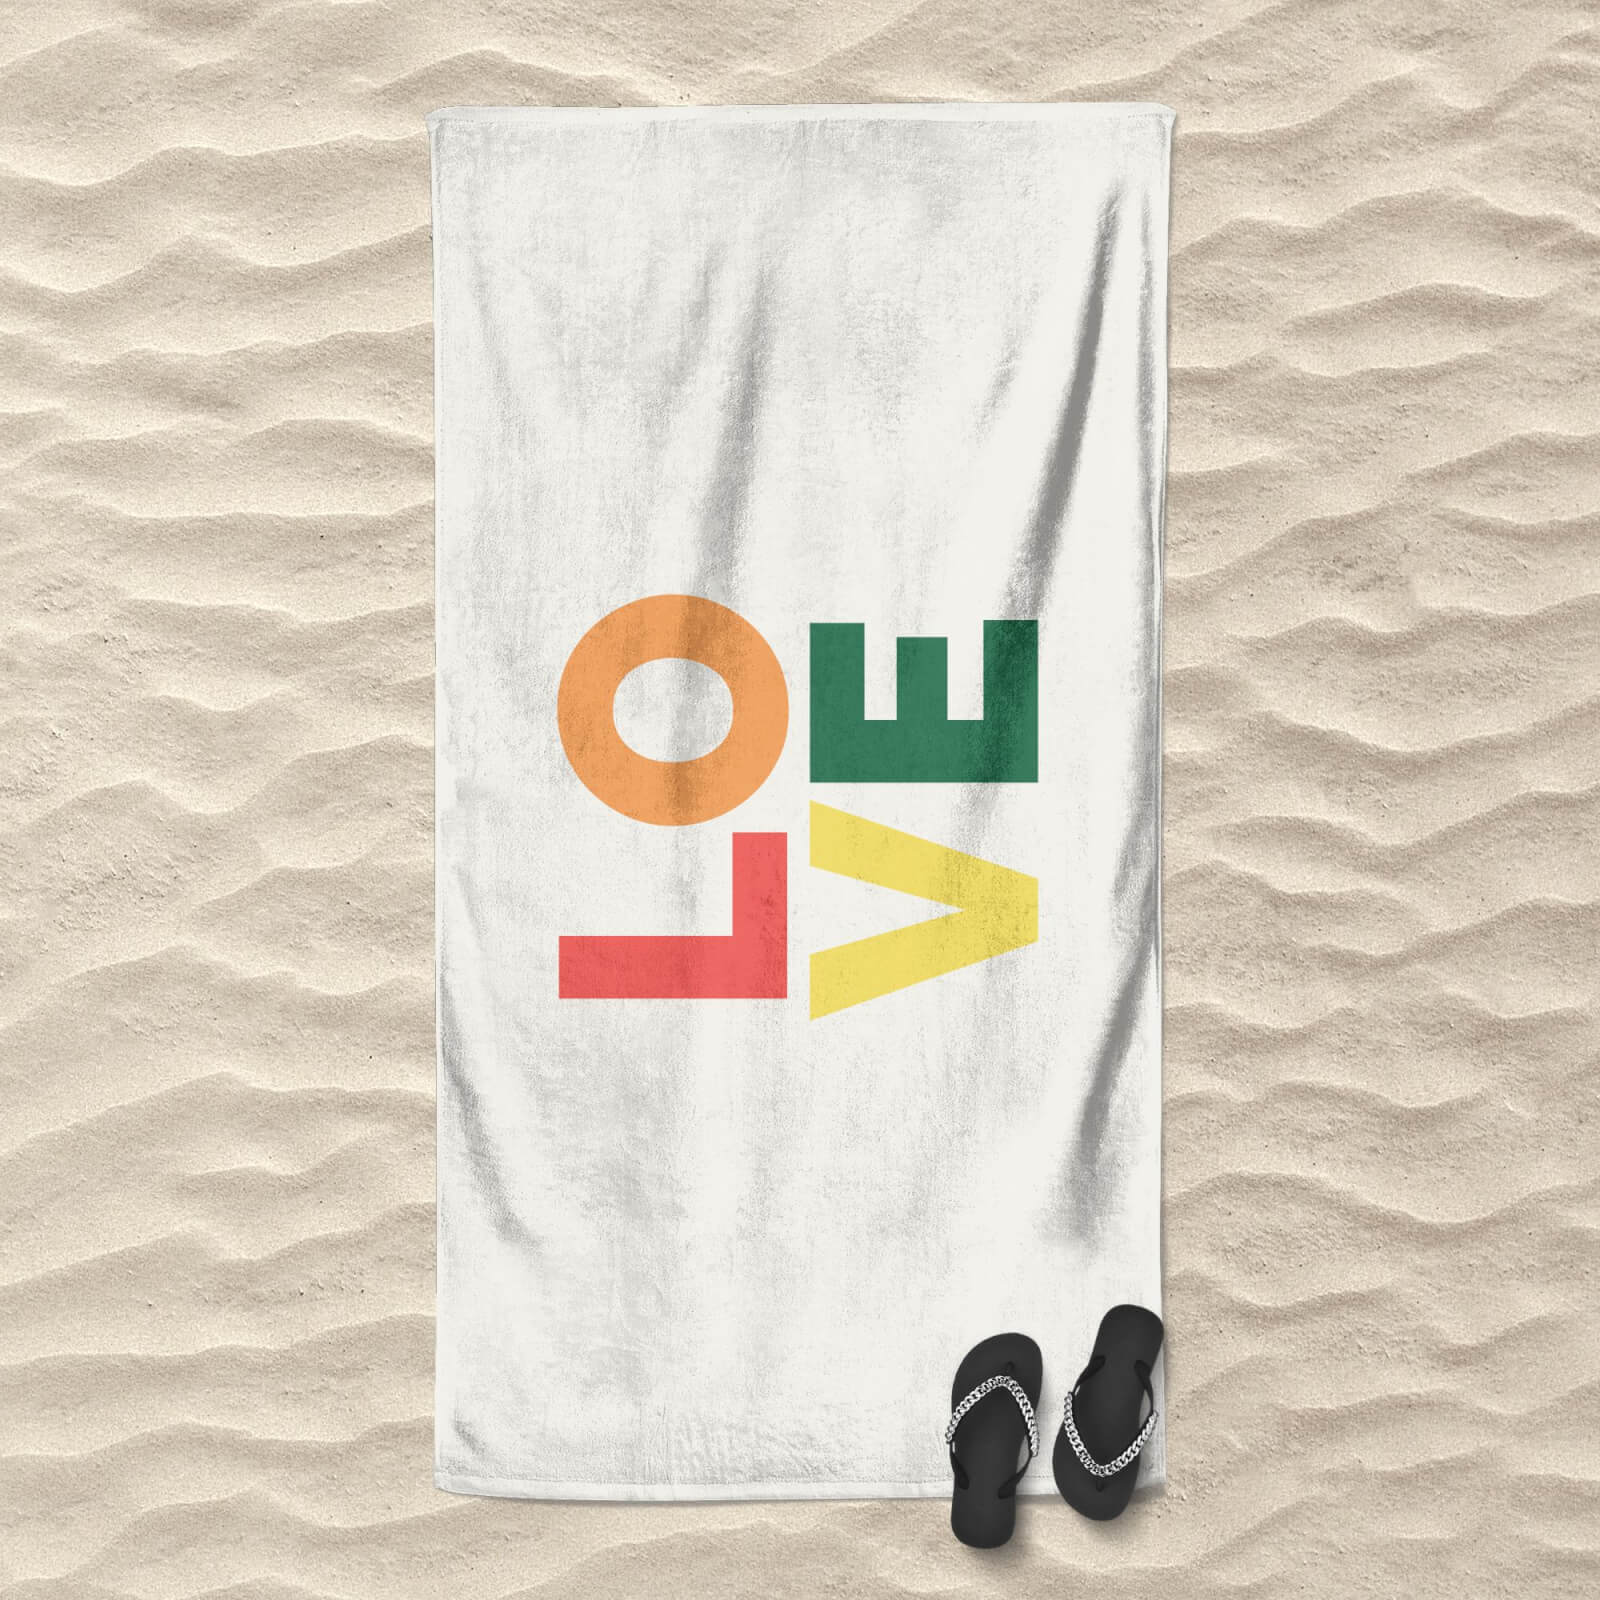 Love Beach Towel